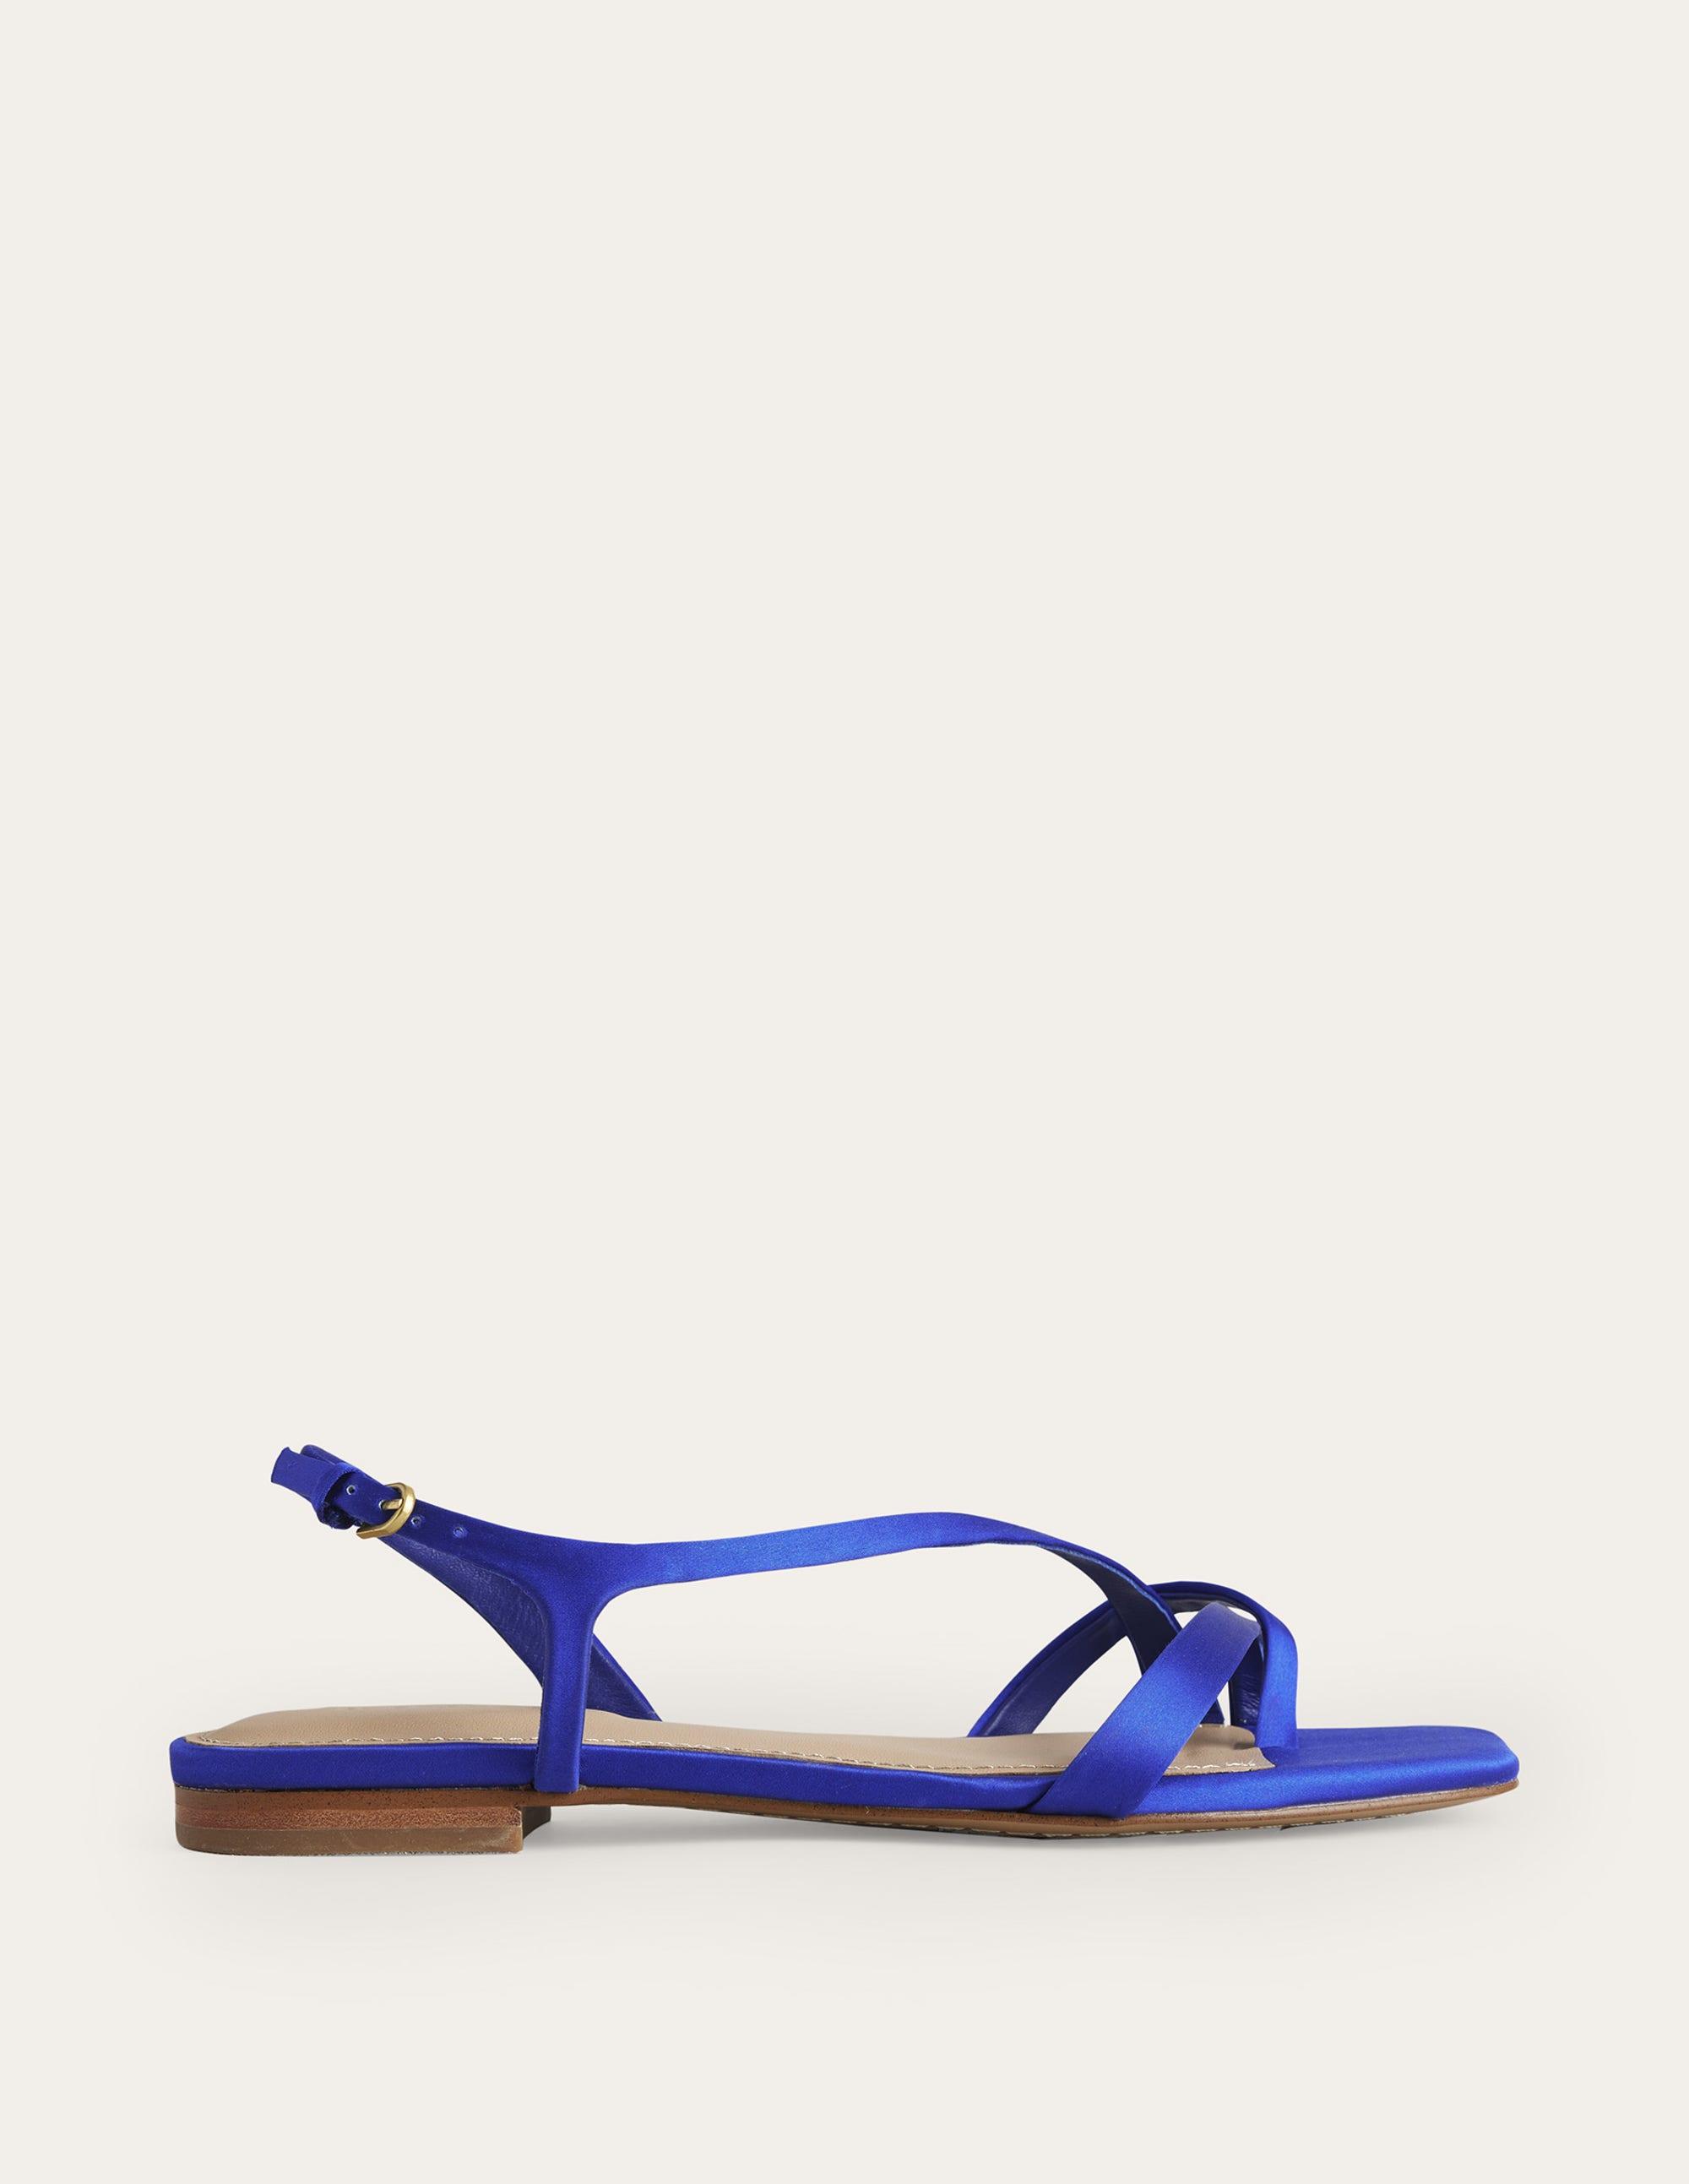 Buy Light Blue Flat Sandals for Women by Design Crew Online  Ajiocom